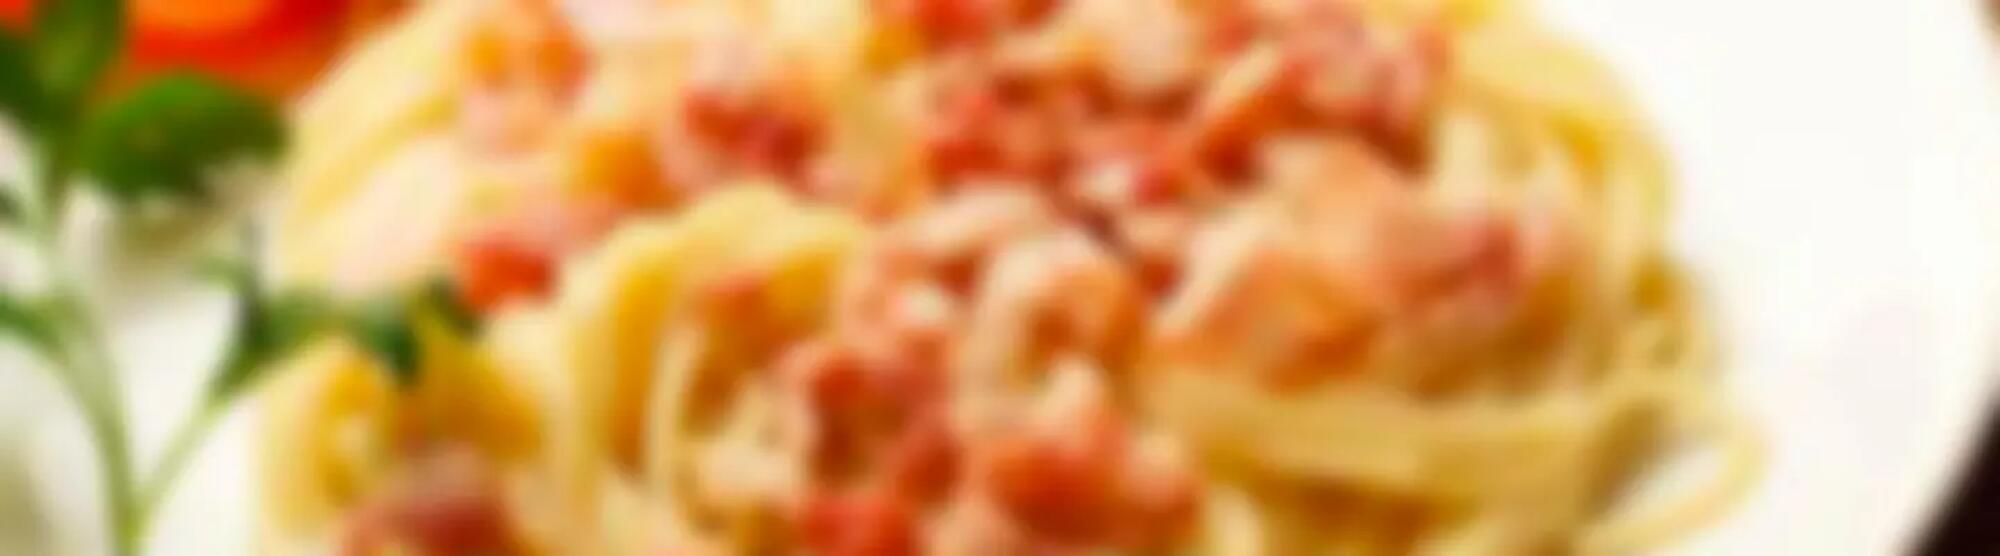 Recette : Spaghetti carbonara au fromage frais